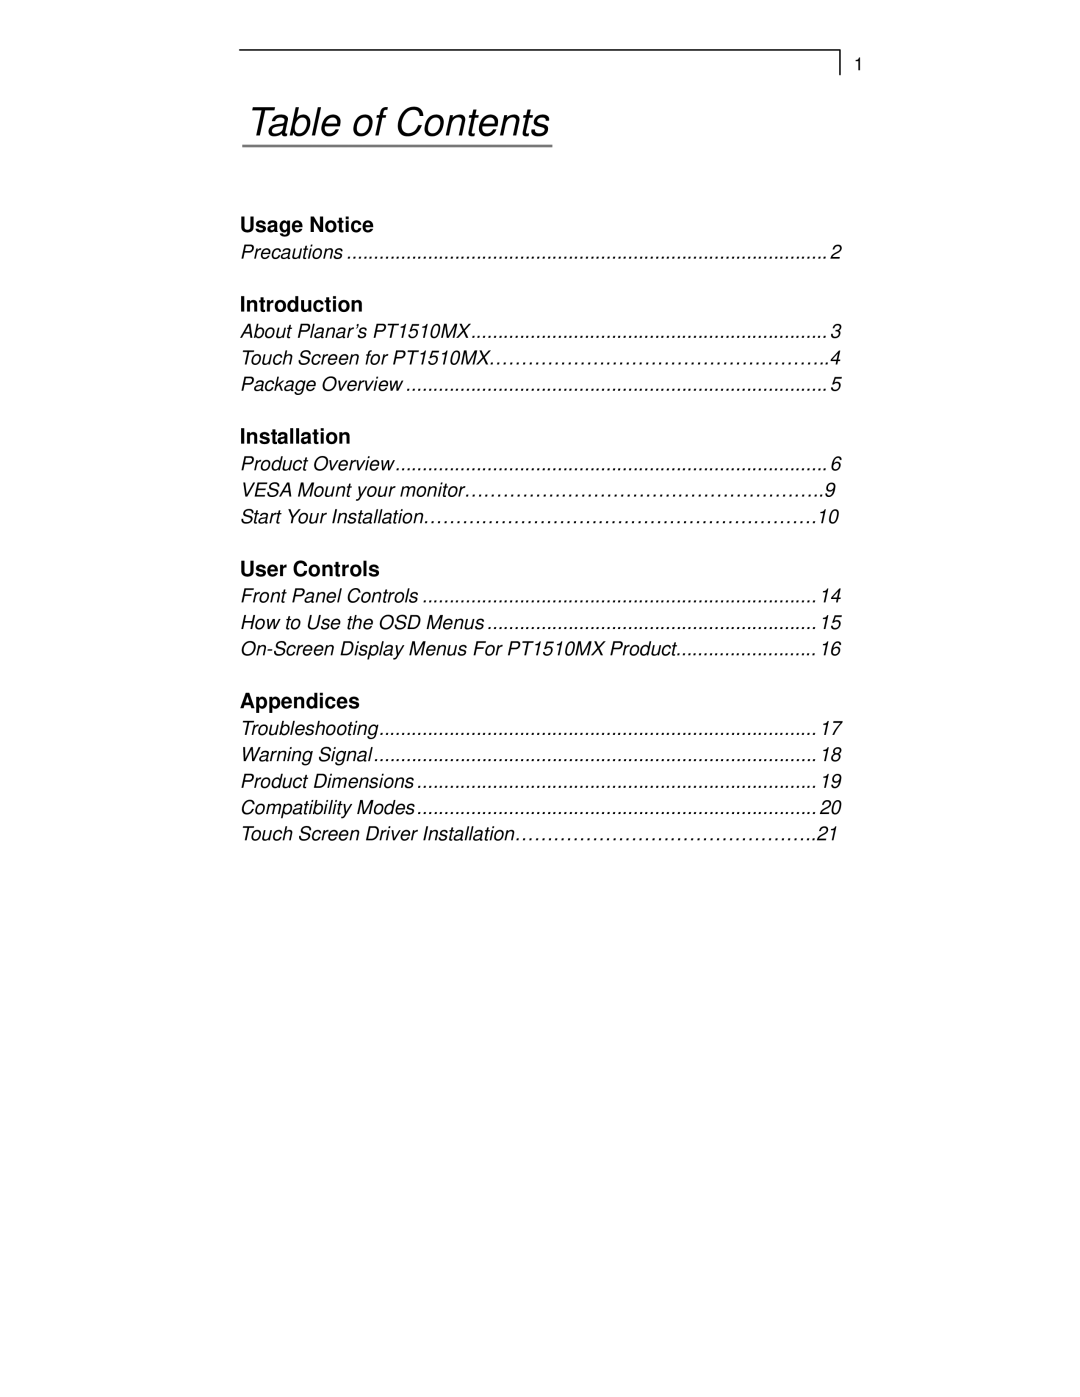 Planar PT1510MX manual Table of Contents 